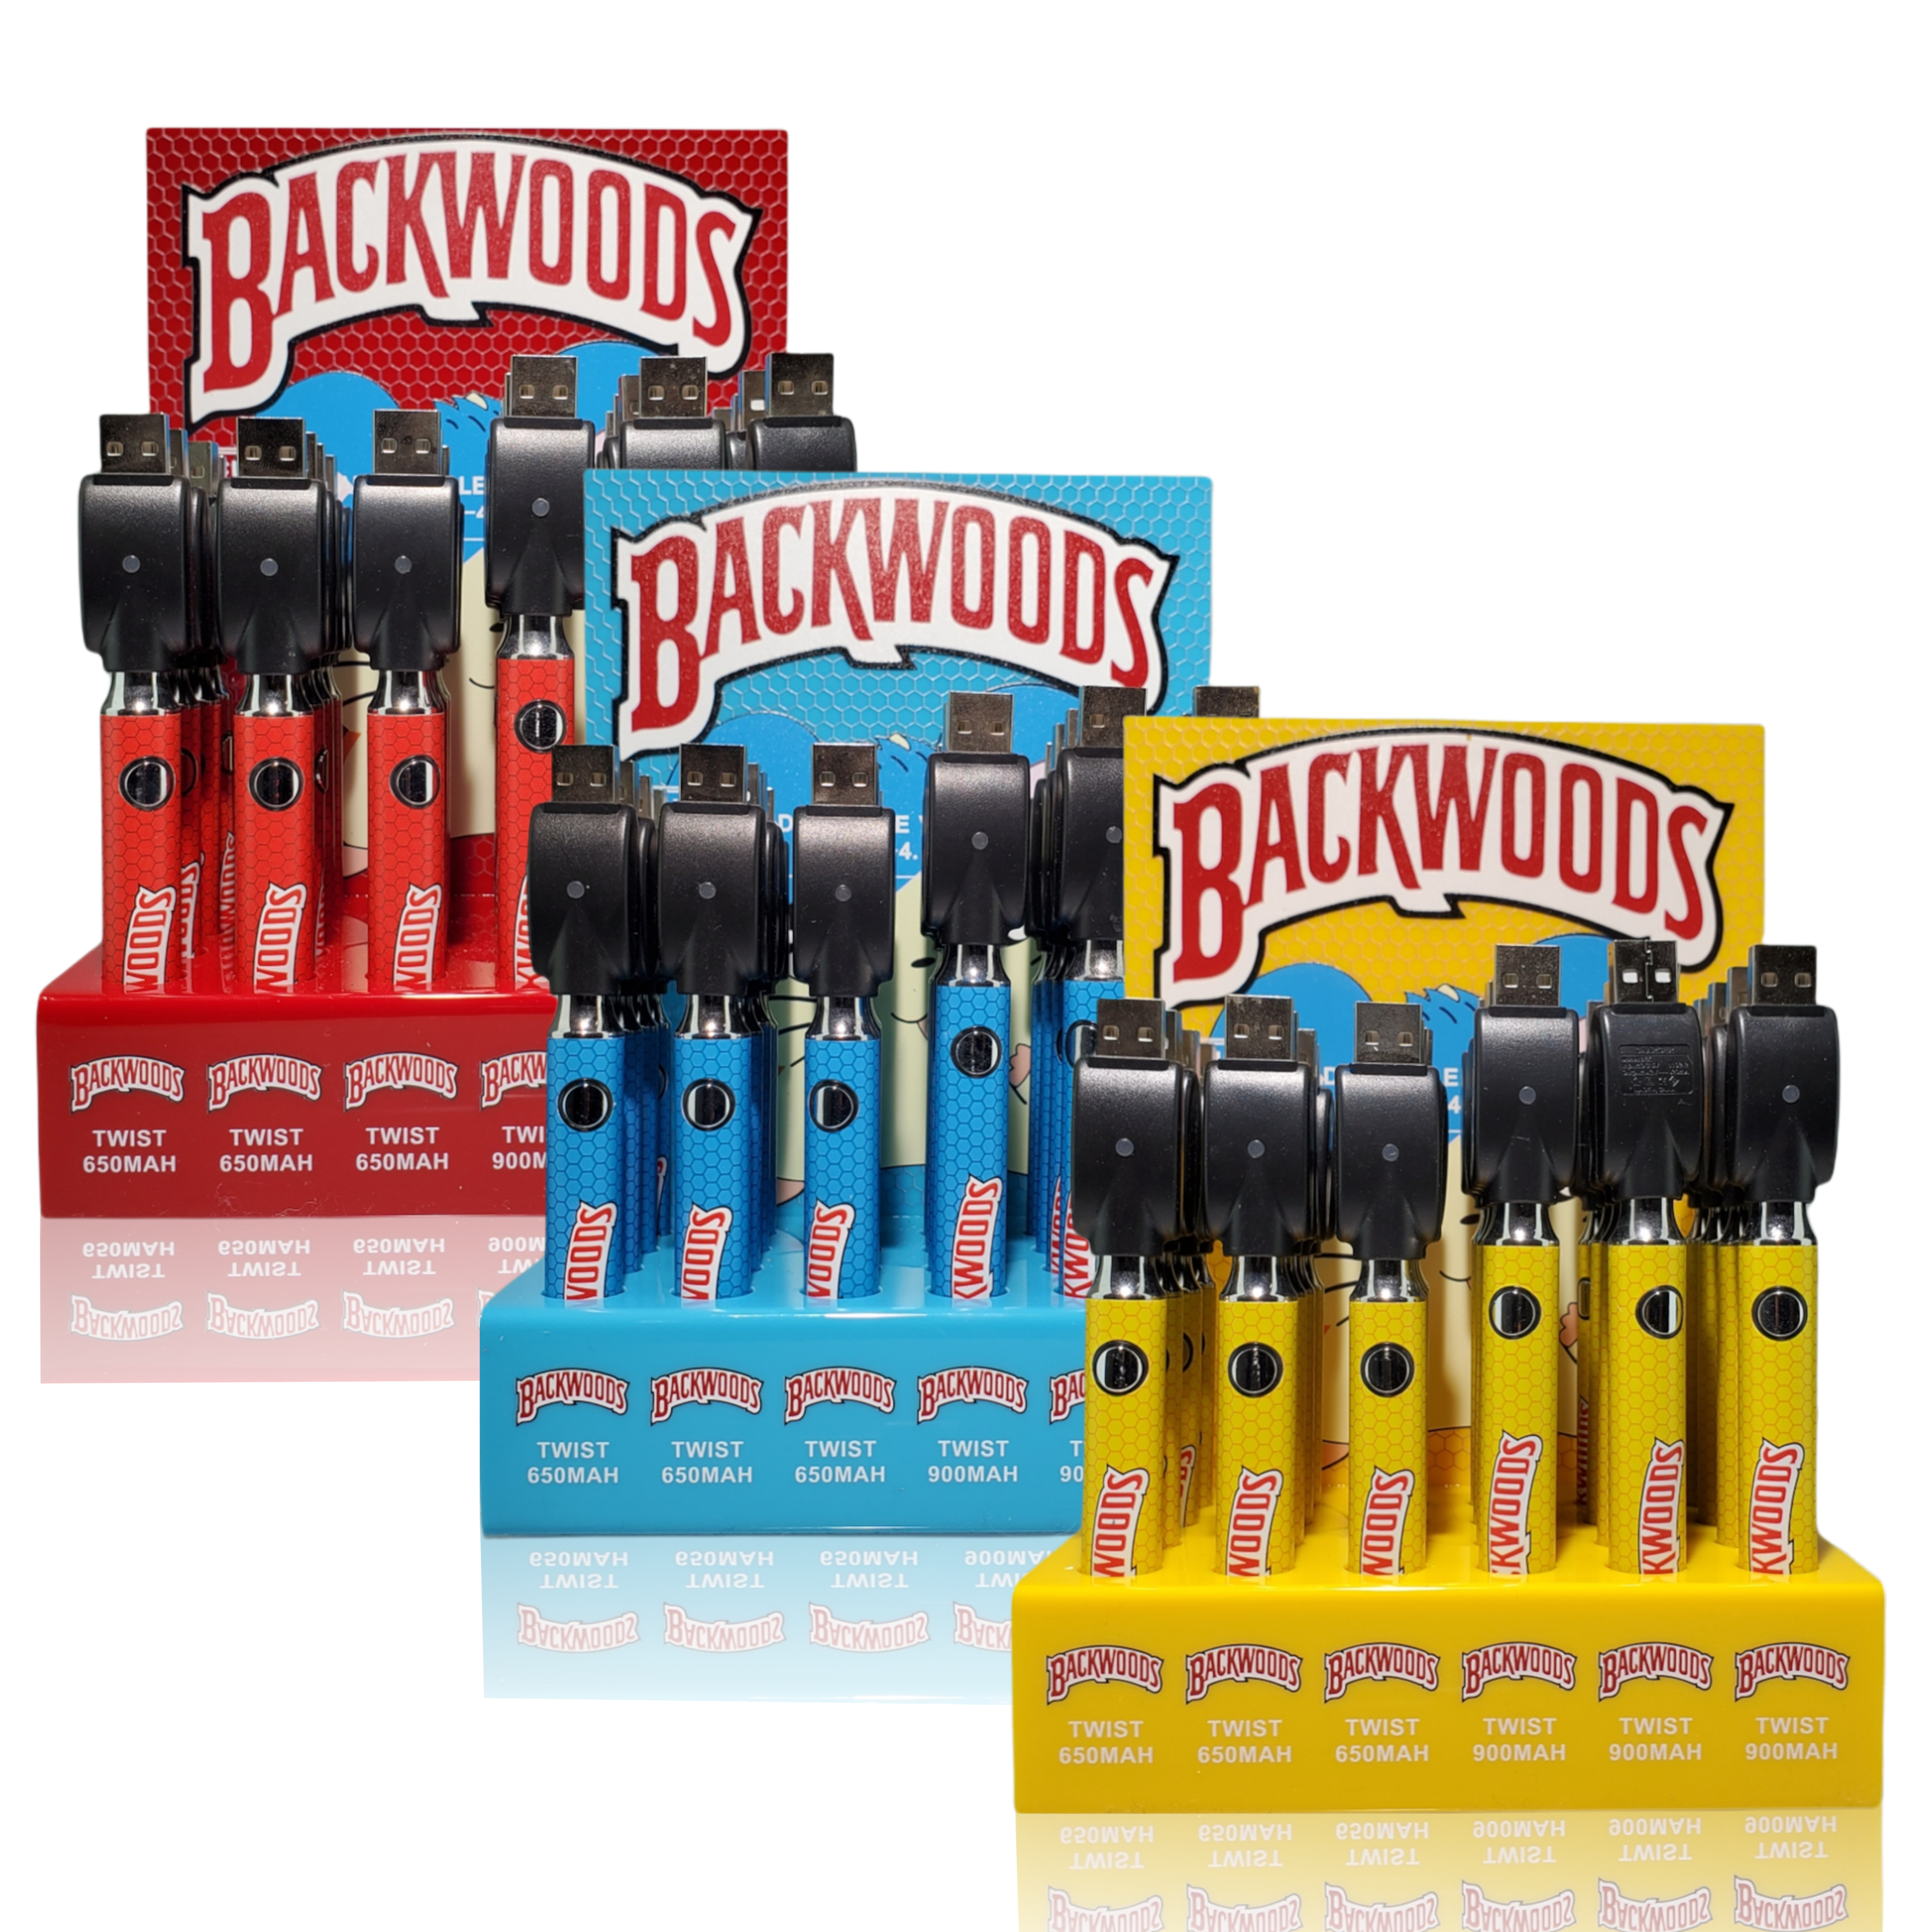 BackWoods Twist Batería Display 24ct